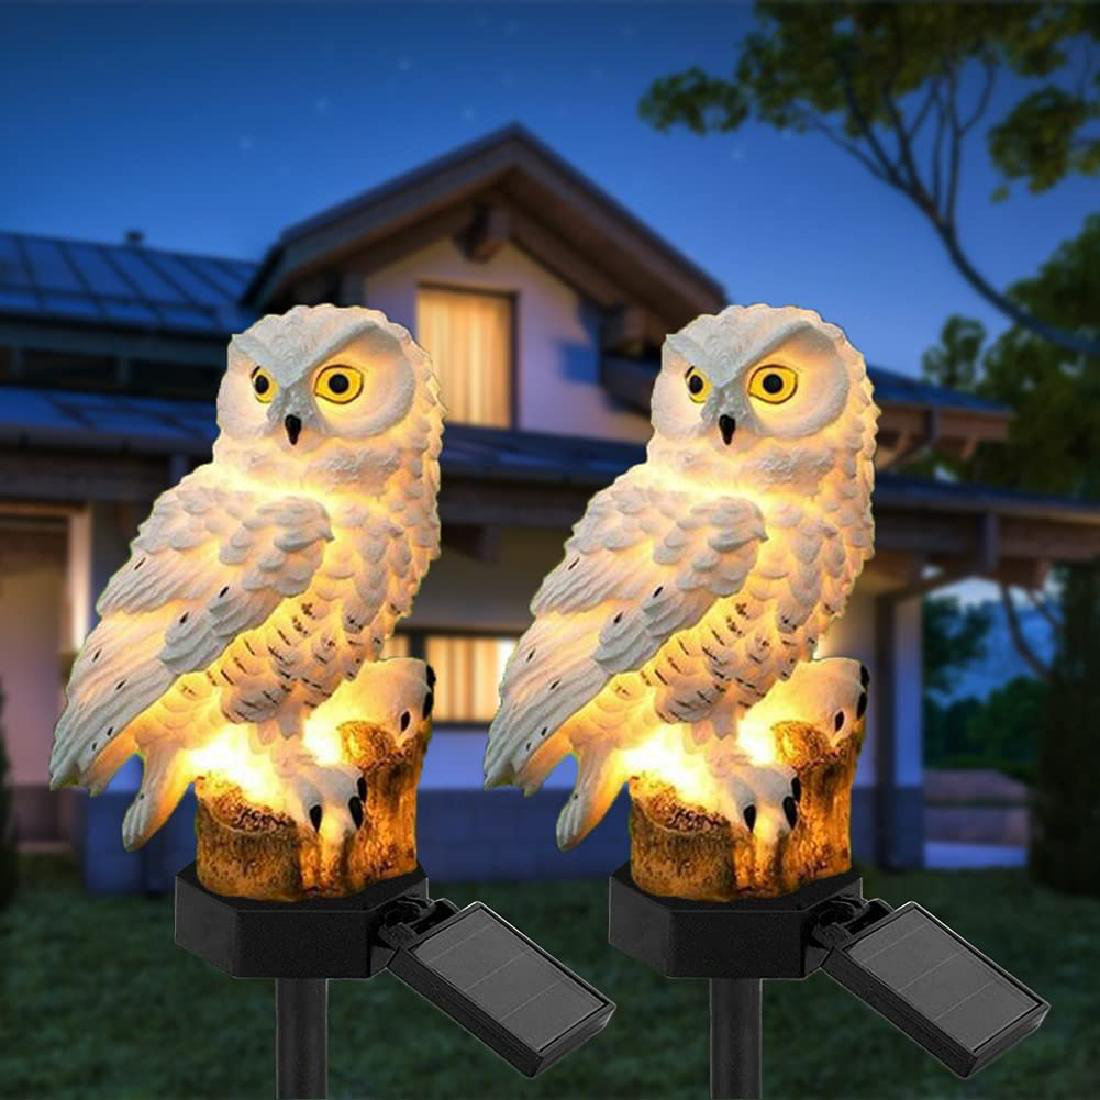 Outdoor Solar Power Garden Ornament Owl Shape Portable Night Energy Save Lights 